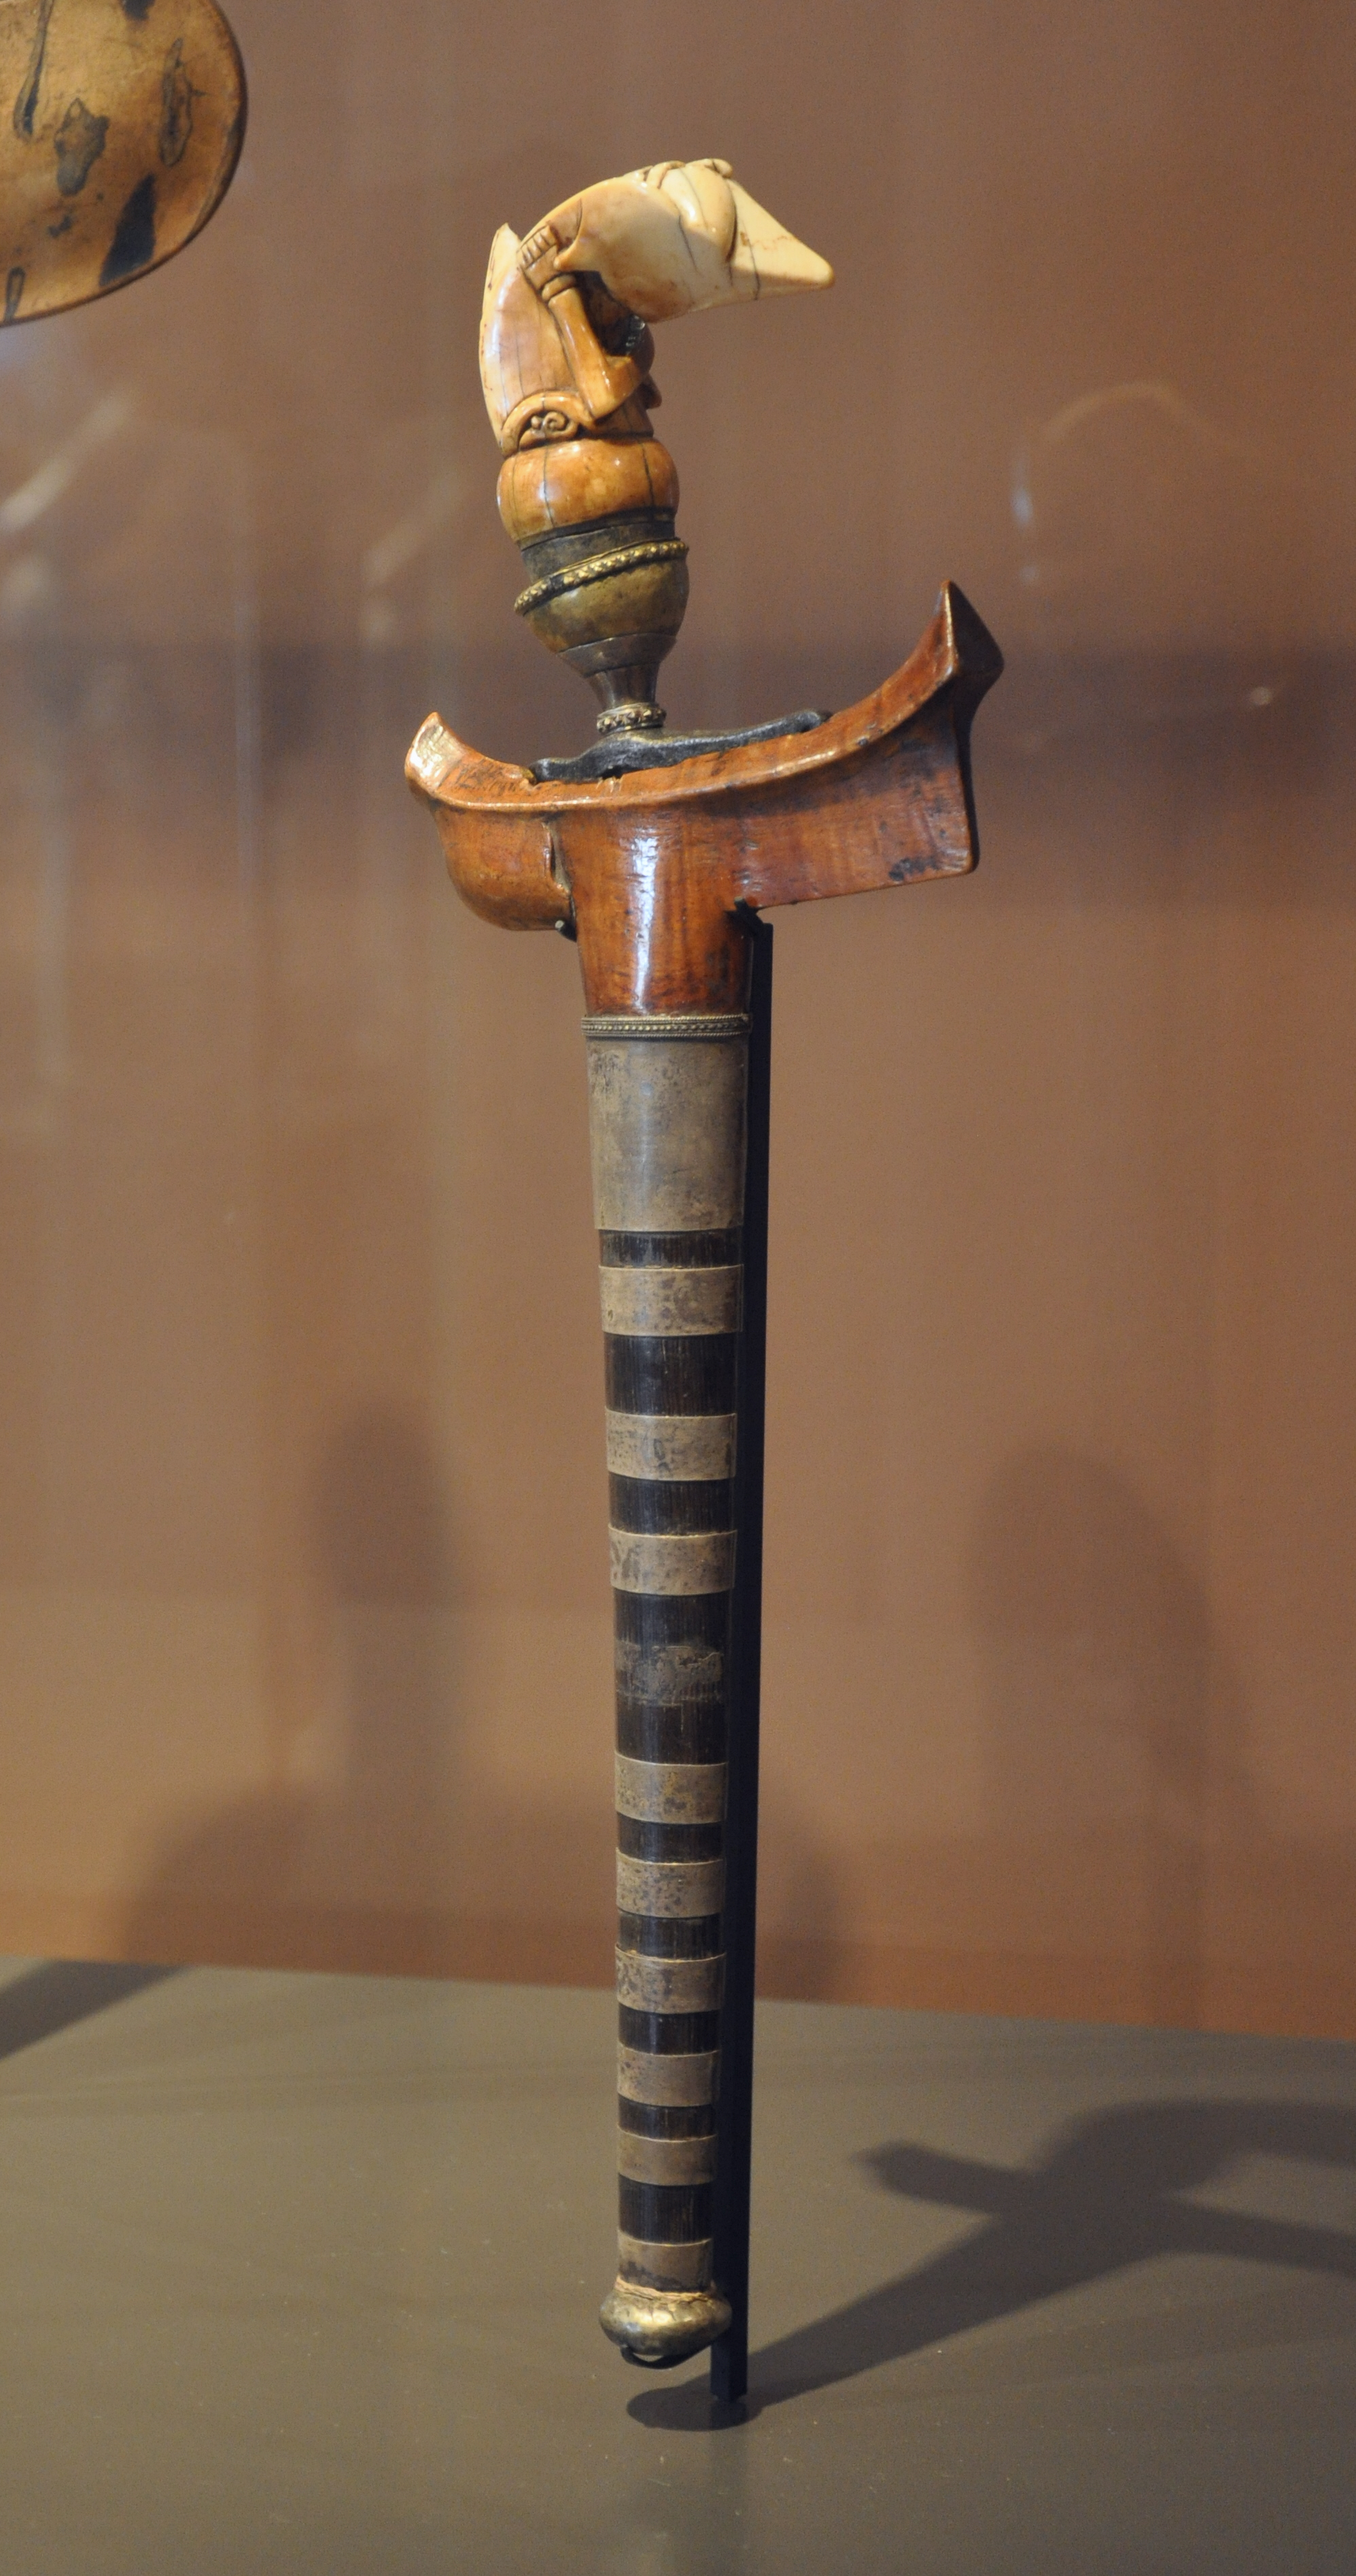 Weapons of pencak silat - Wikipedia